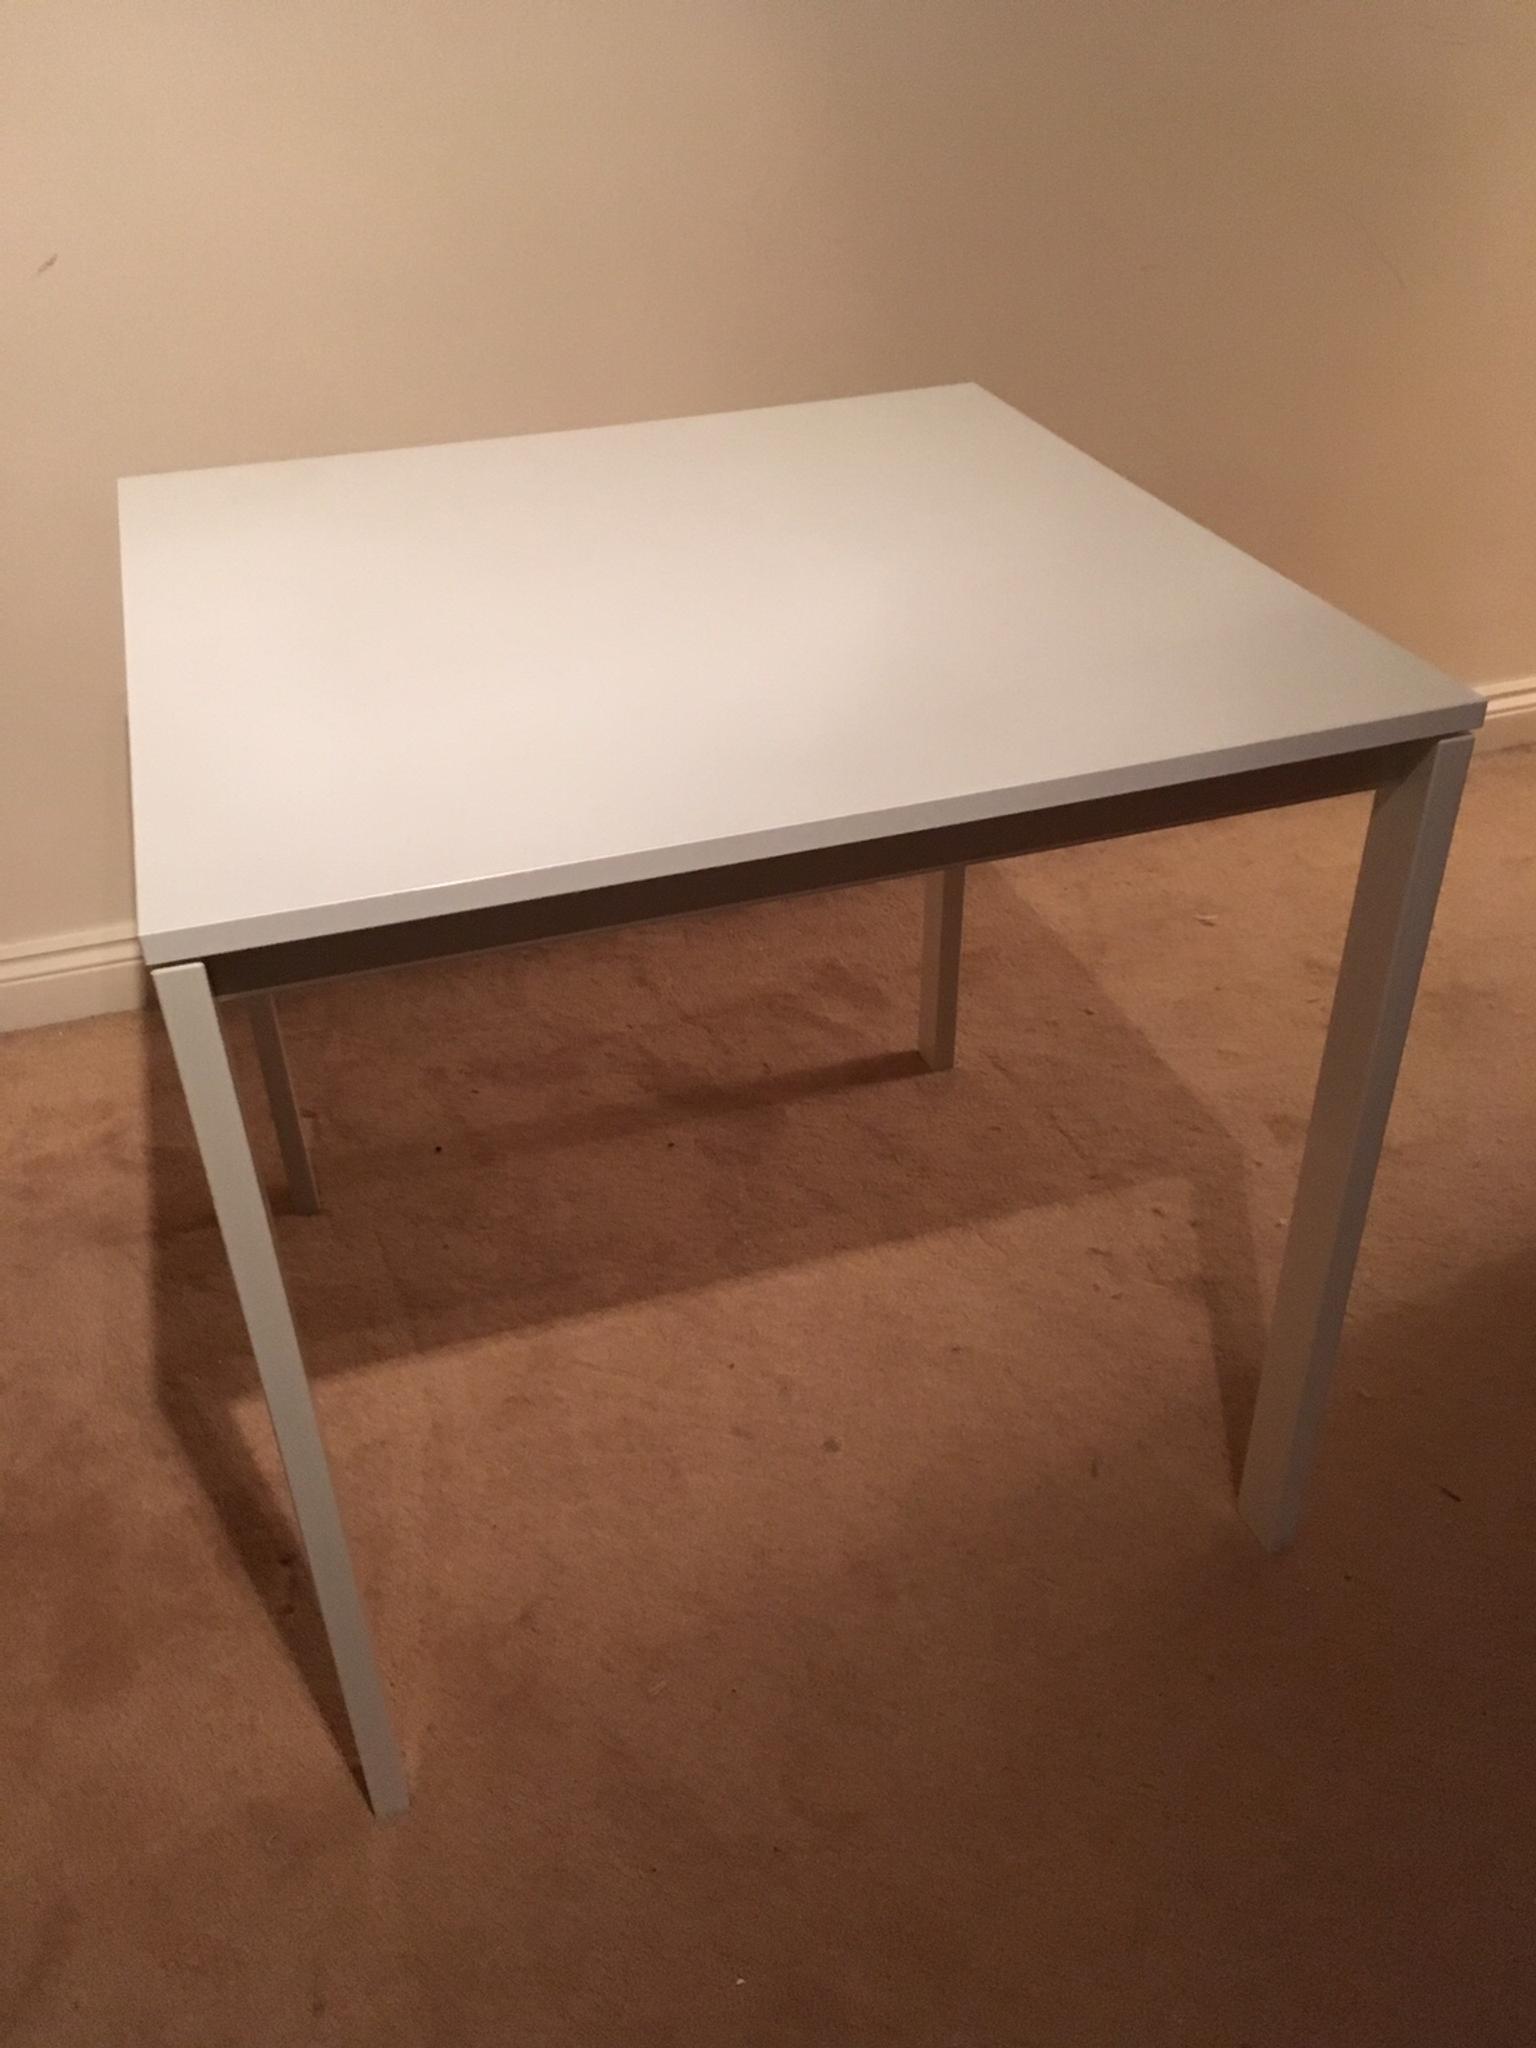 White Table Ikea Melltorp 75x75cm In Ha9 London For 17 00 For